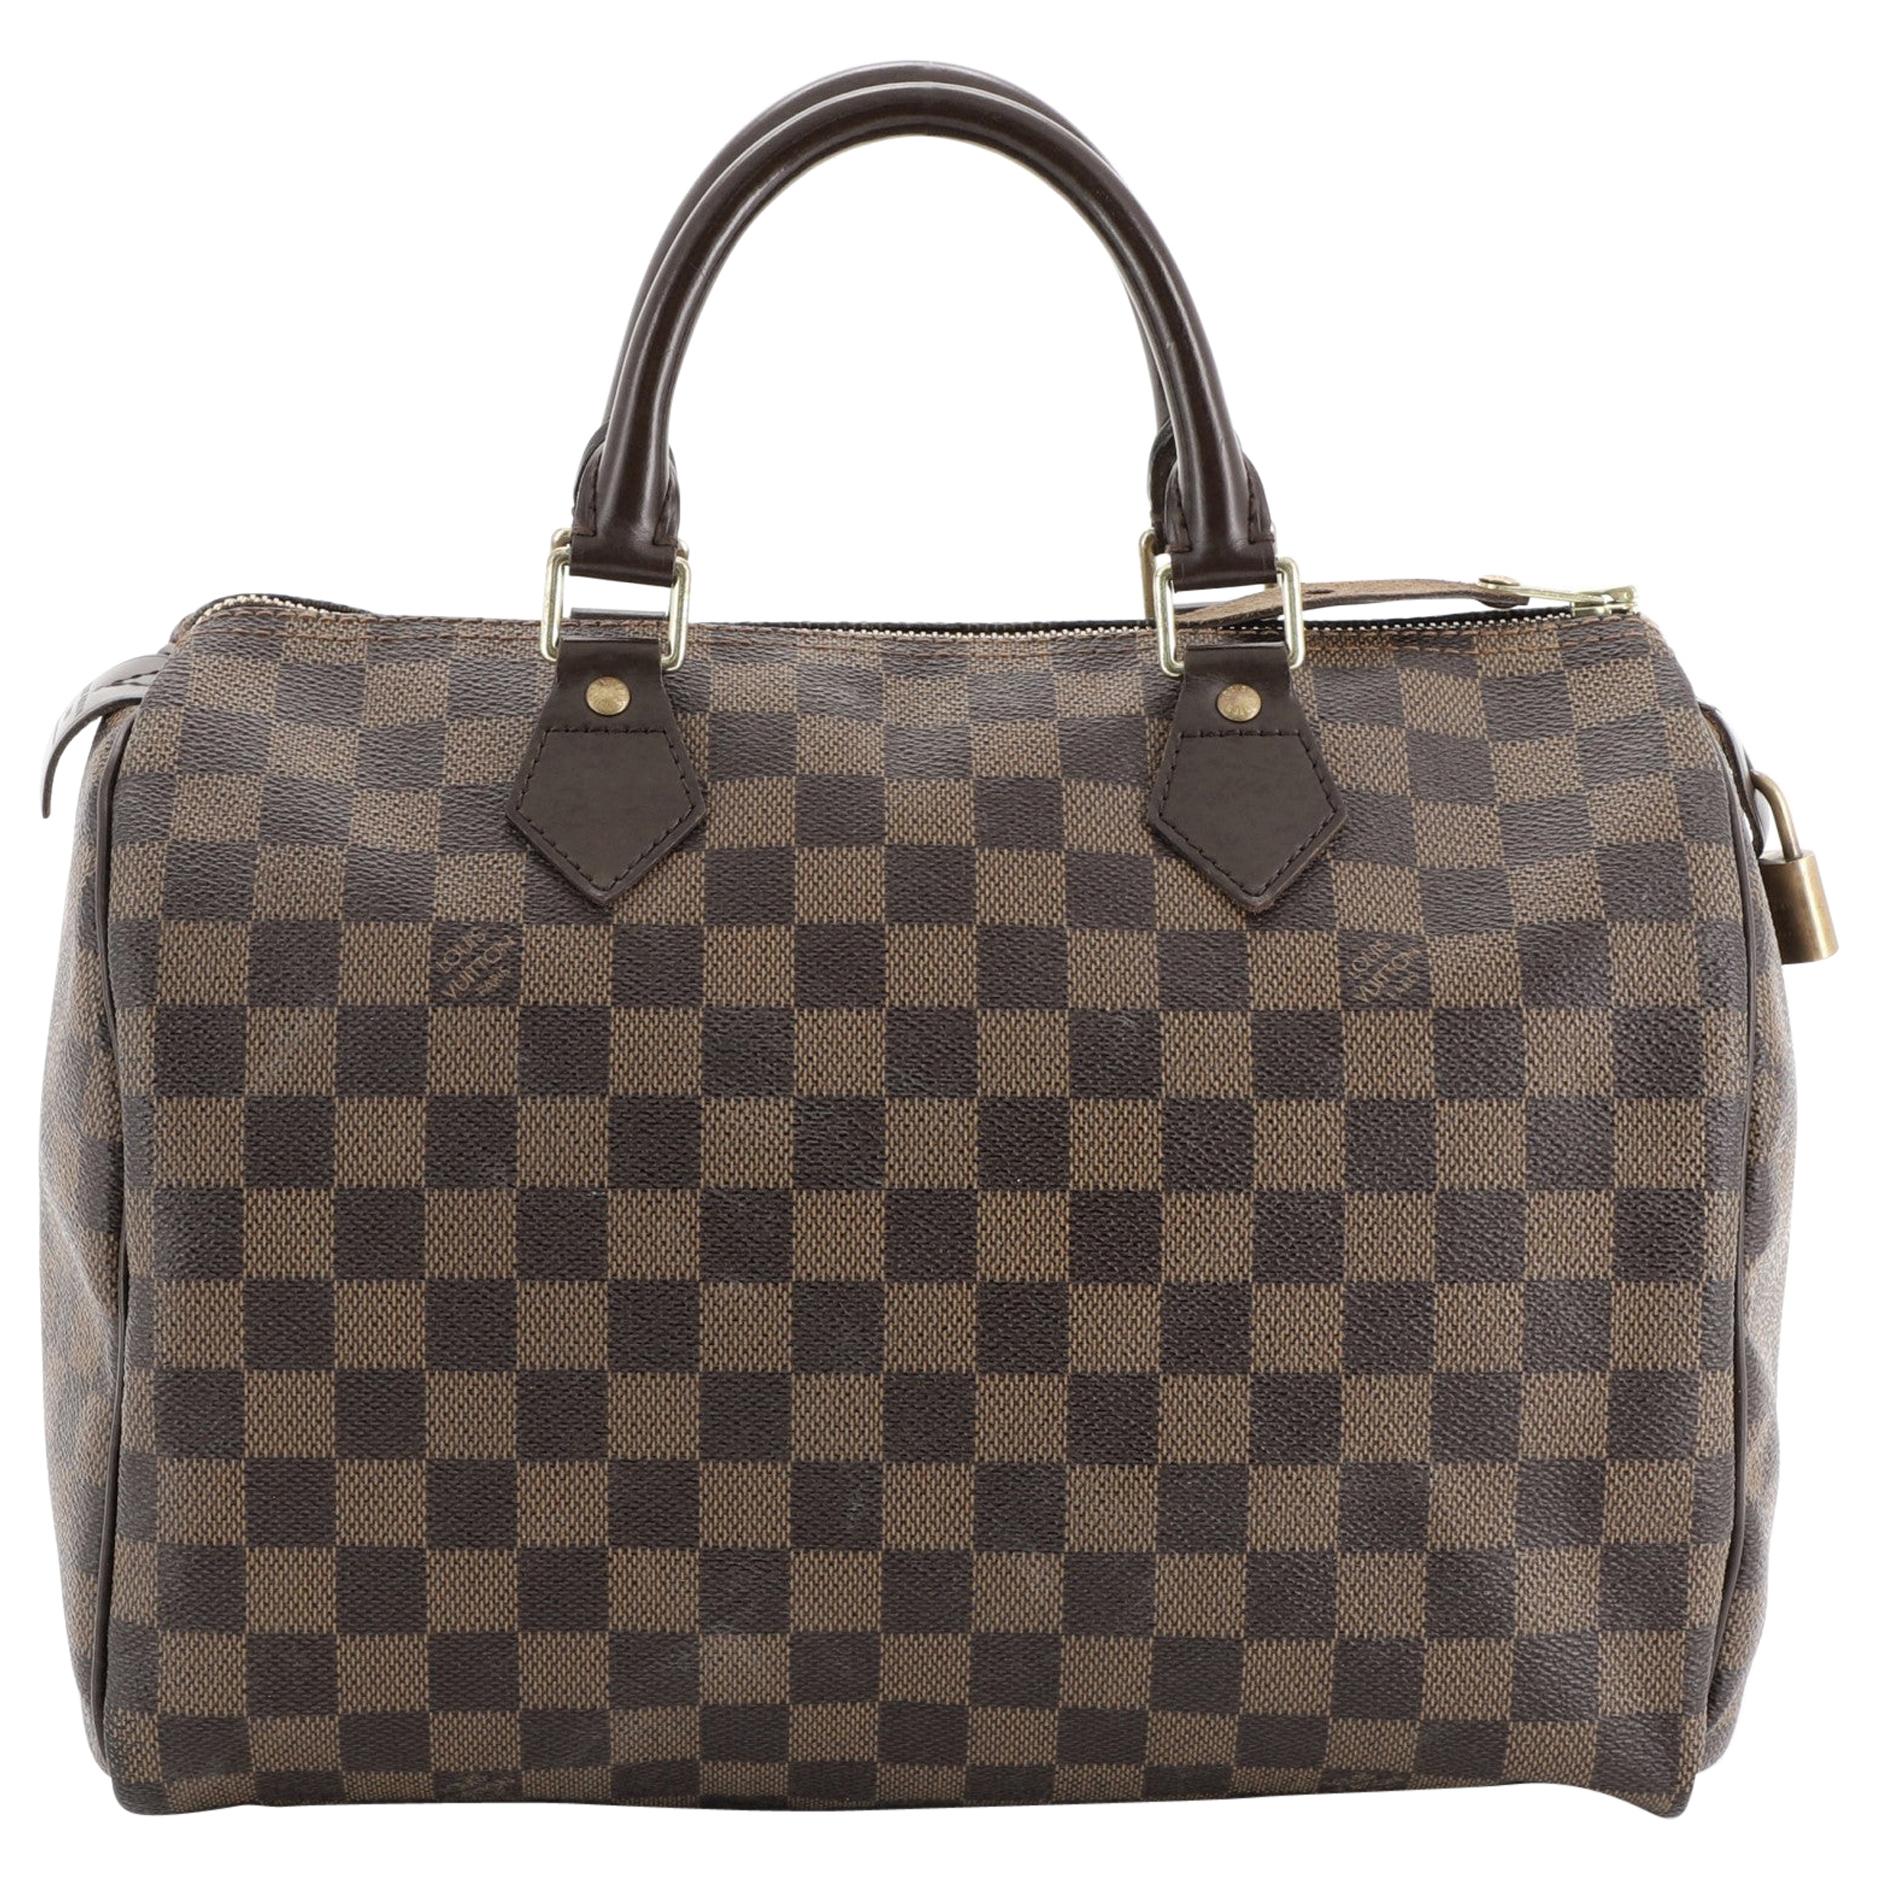 Louis Vuitton Speedy Handbag Damier 30 